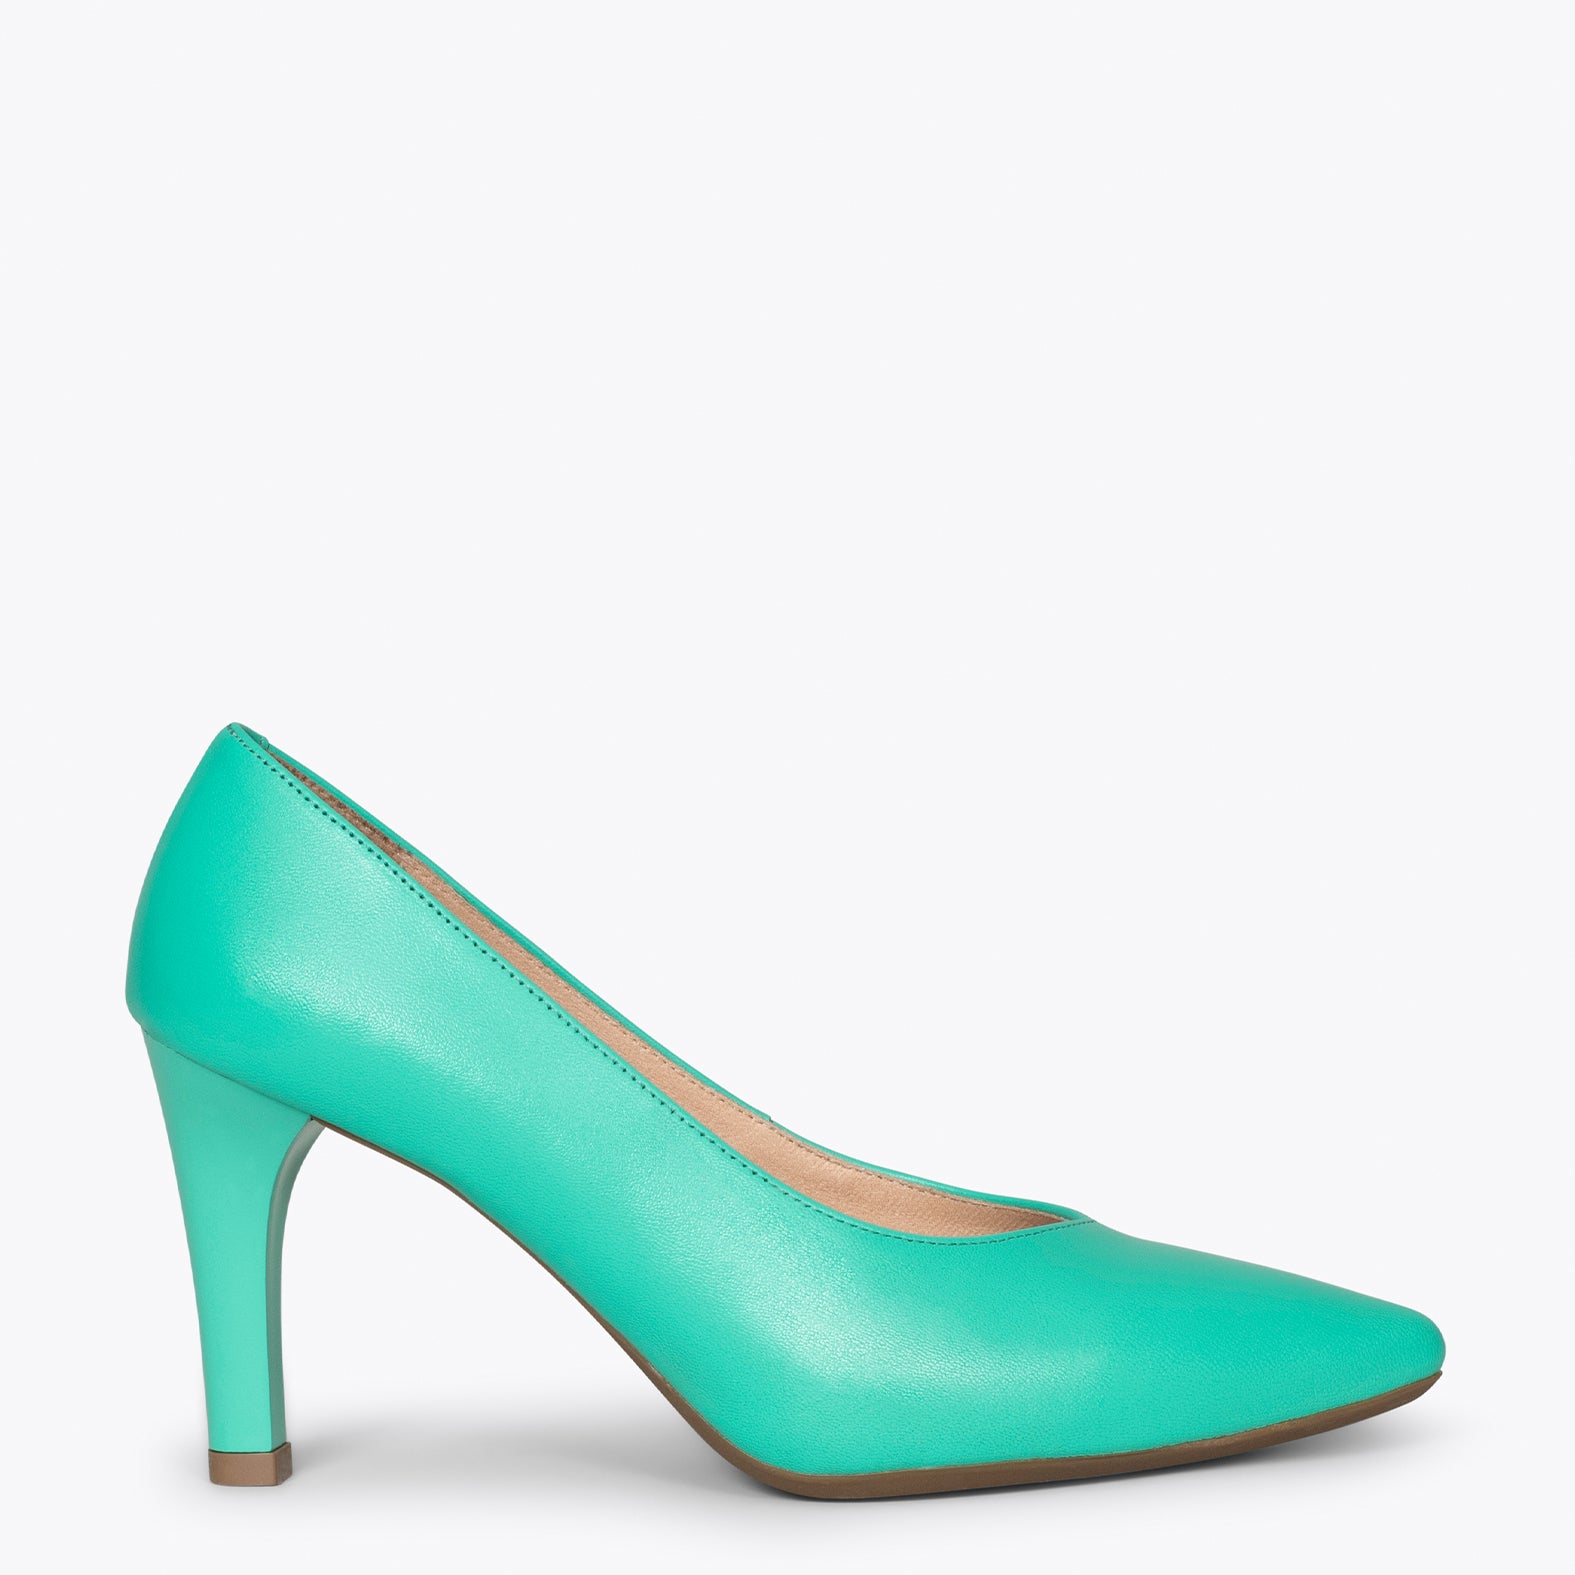 GLAM – TURQUOISE elegant high heels